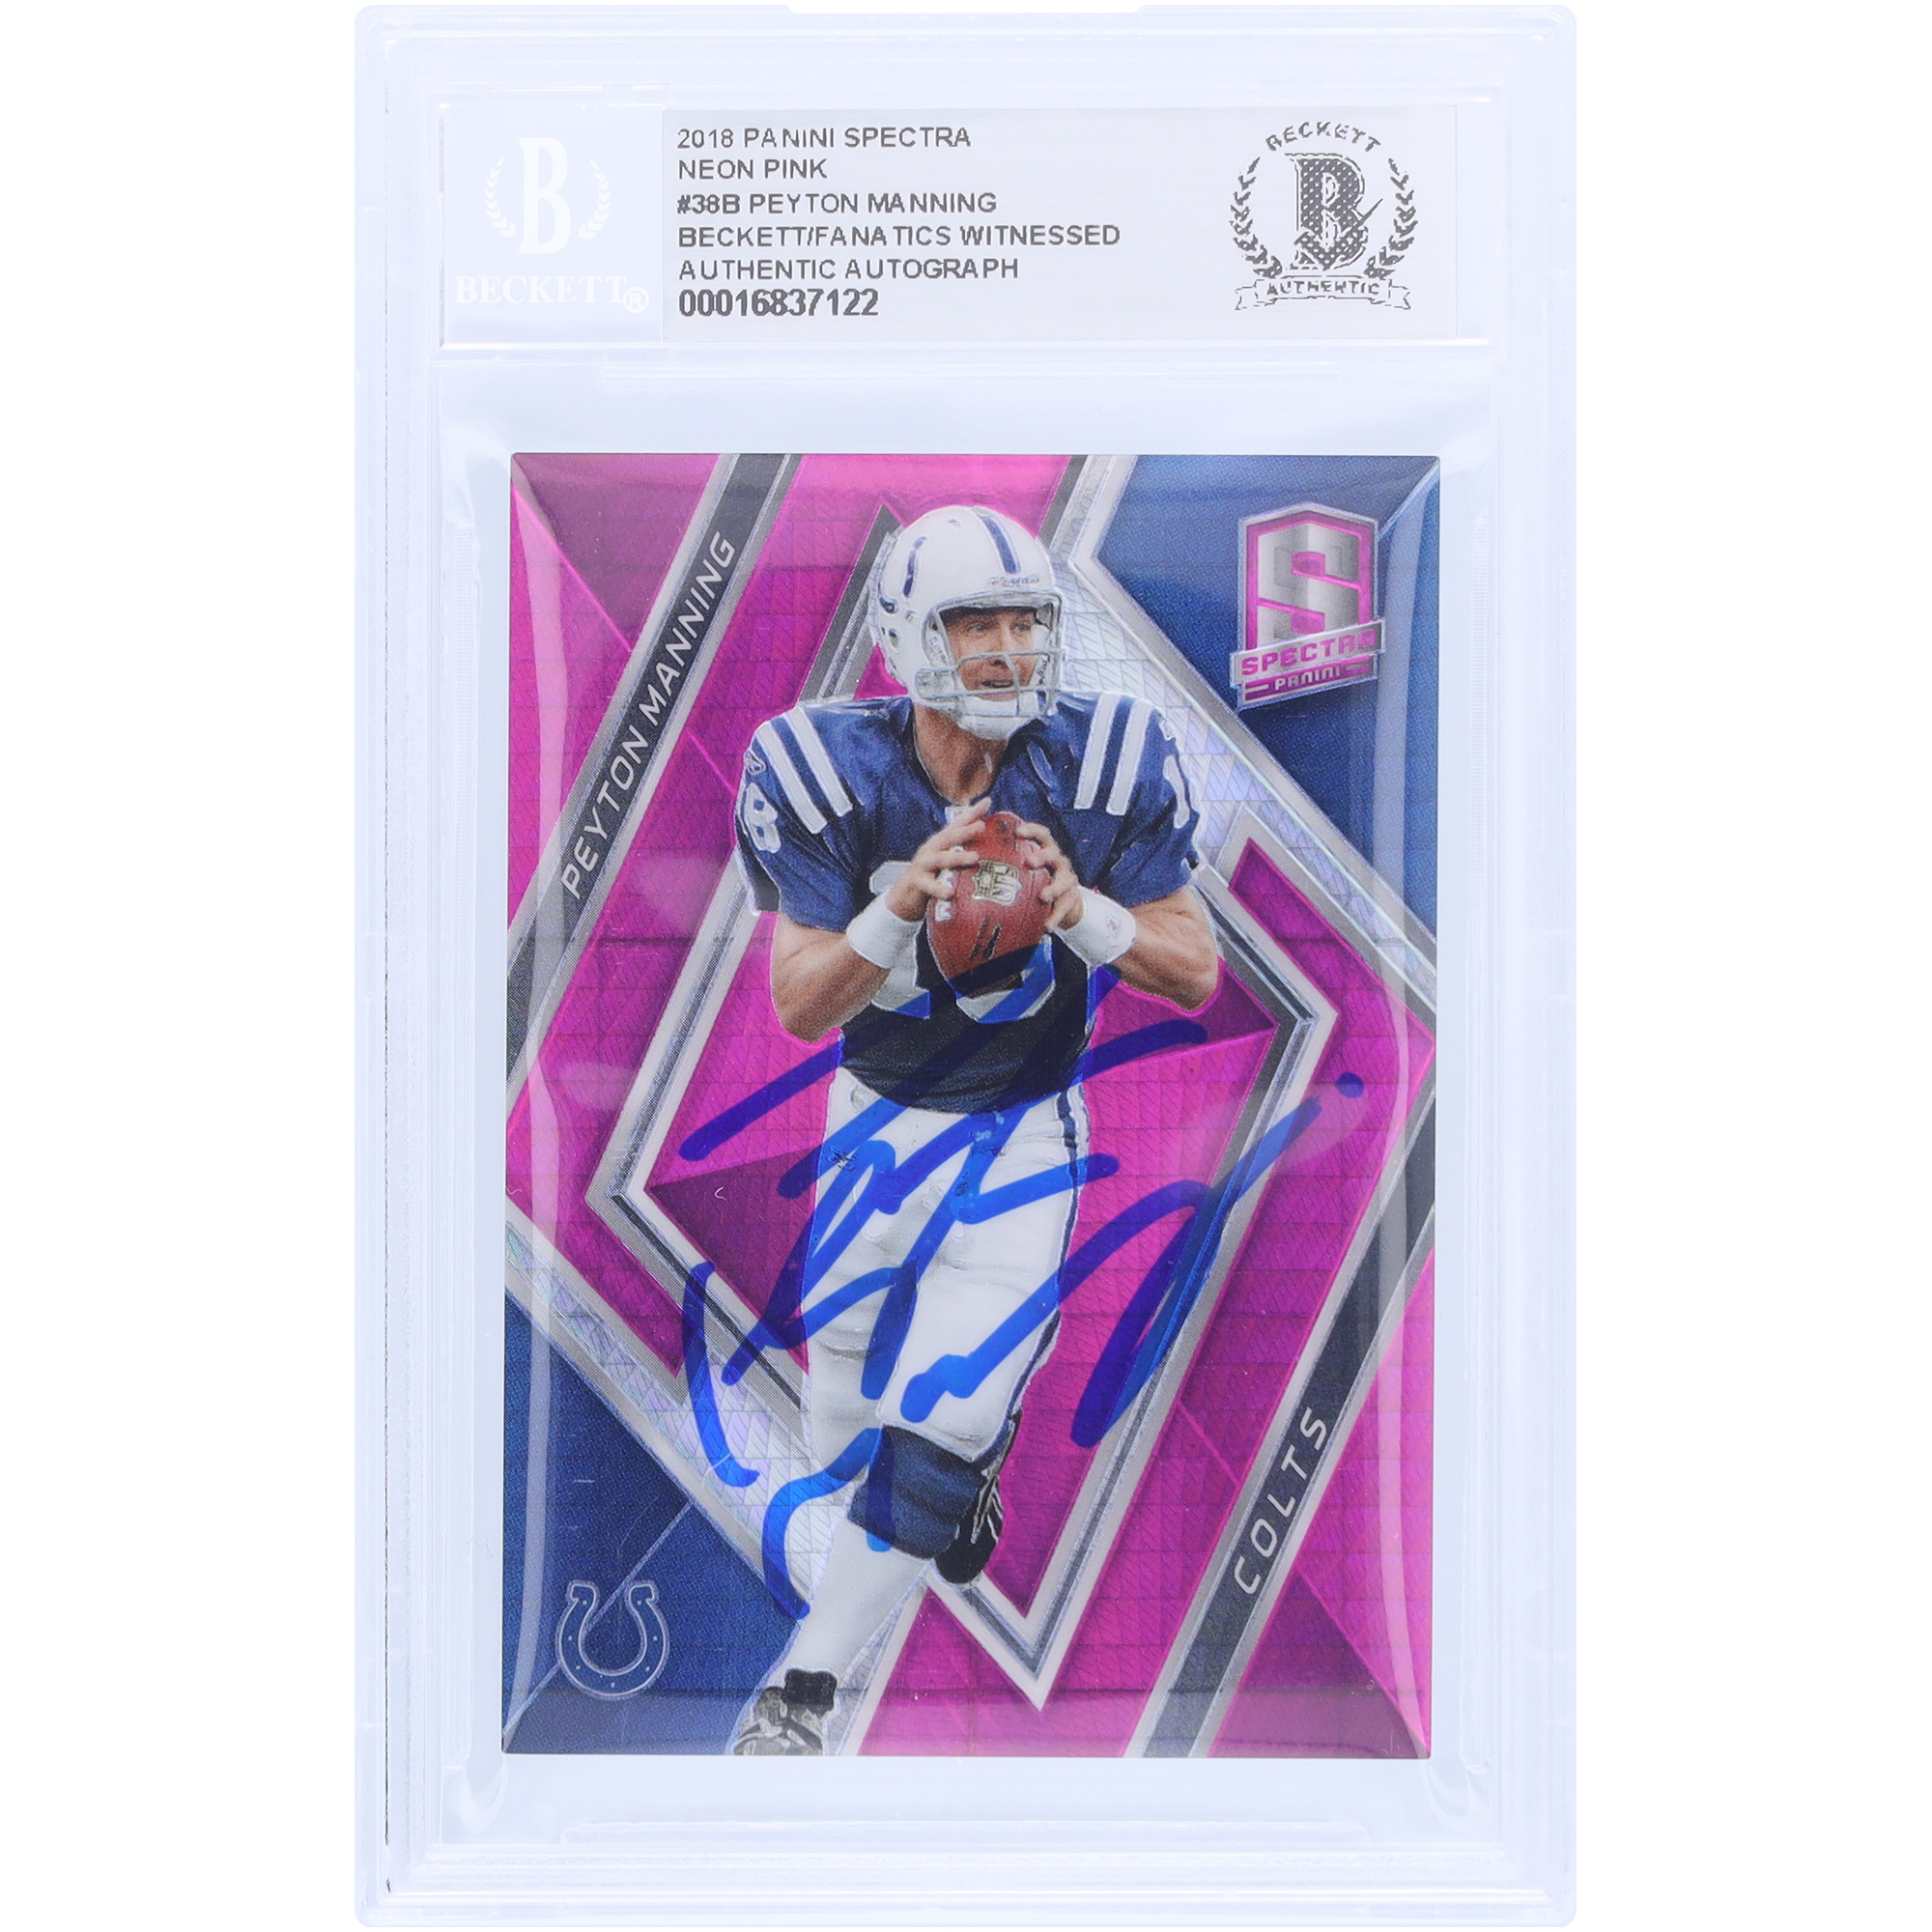 Peyton Manning Indianapolis Colts signierte 2018 Panini Spectra Neon Pink #38 #6/20 Beckett Fanatics bezeugte authentifizierte Karte